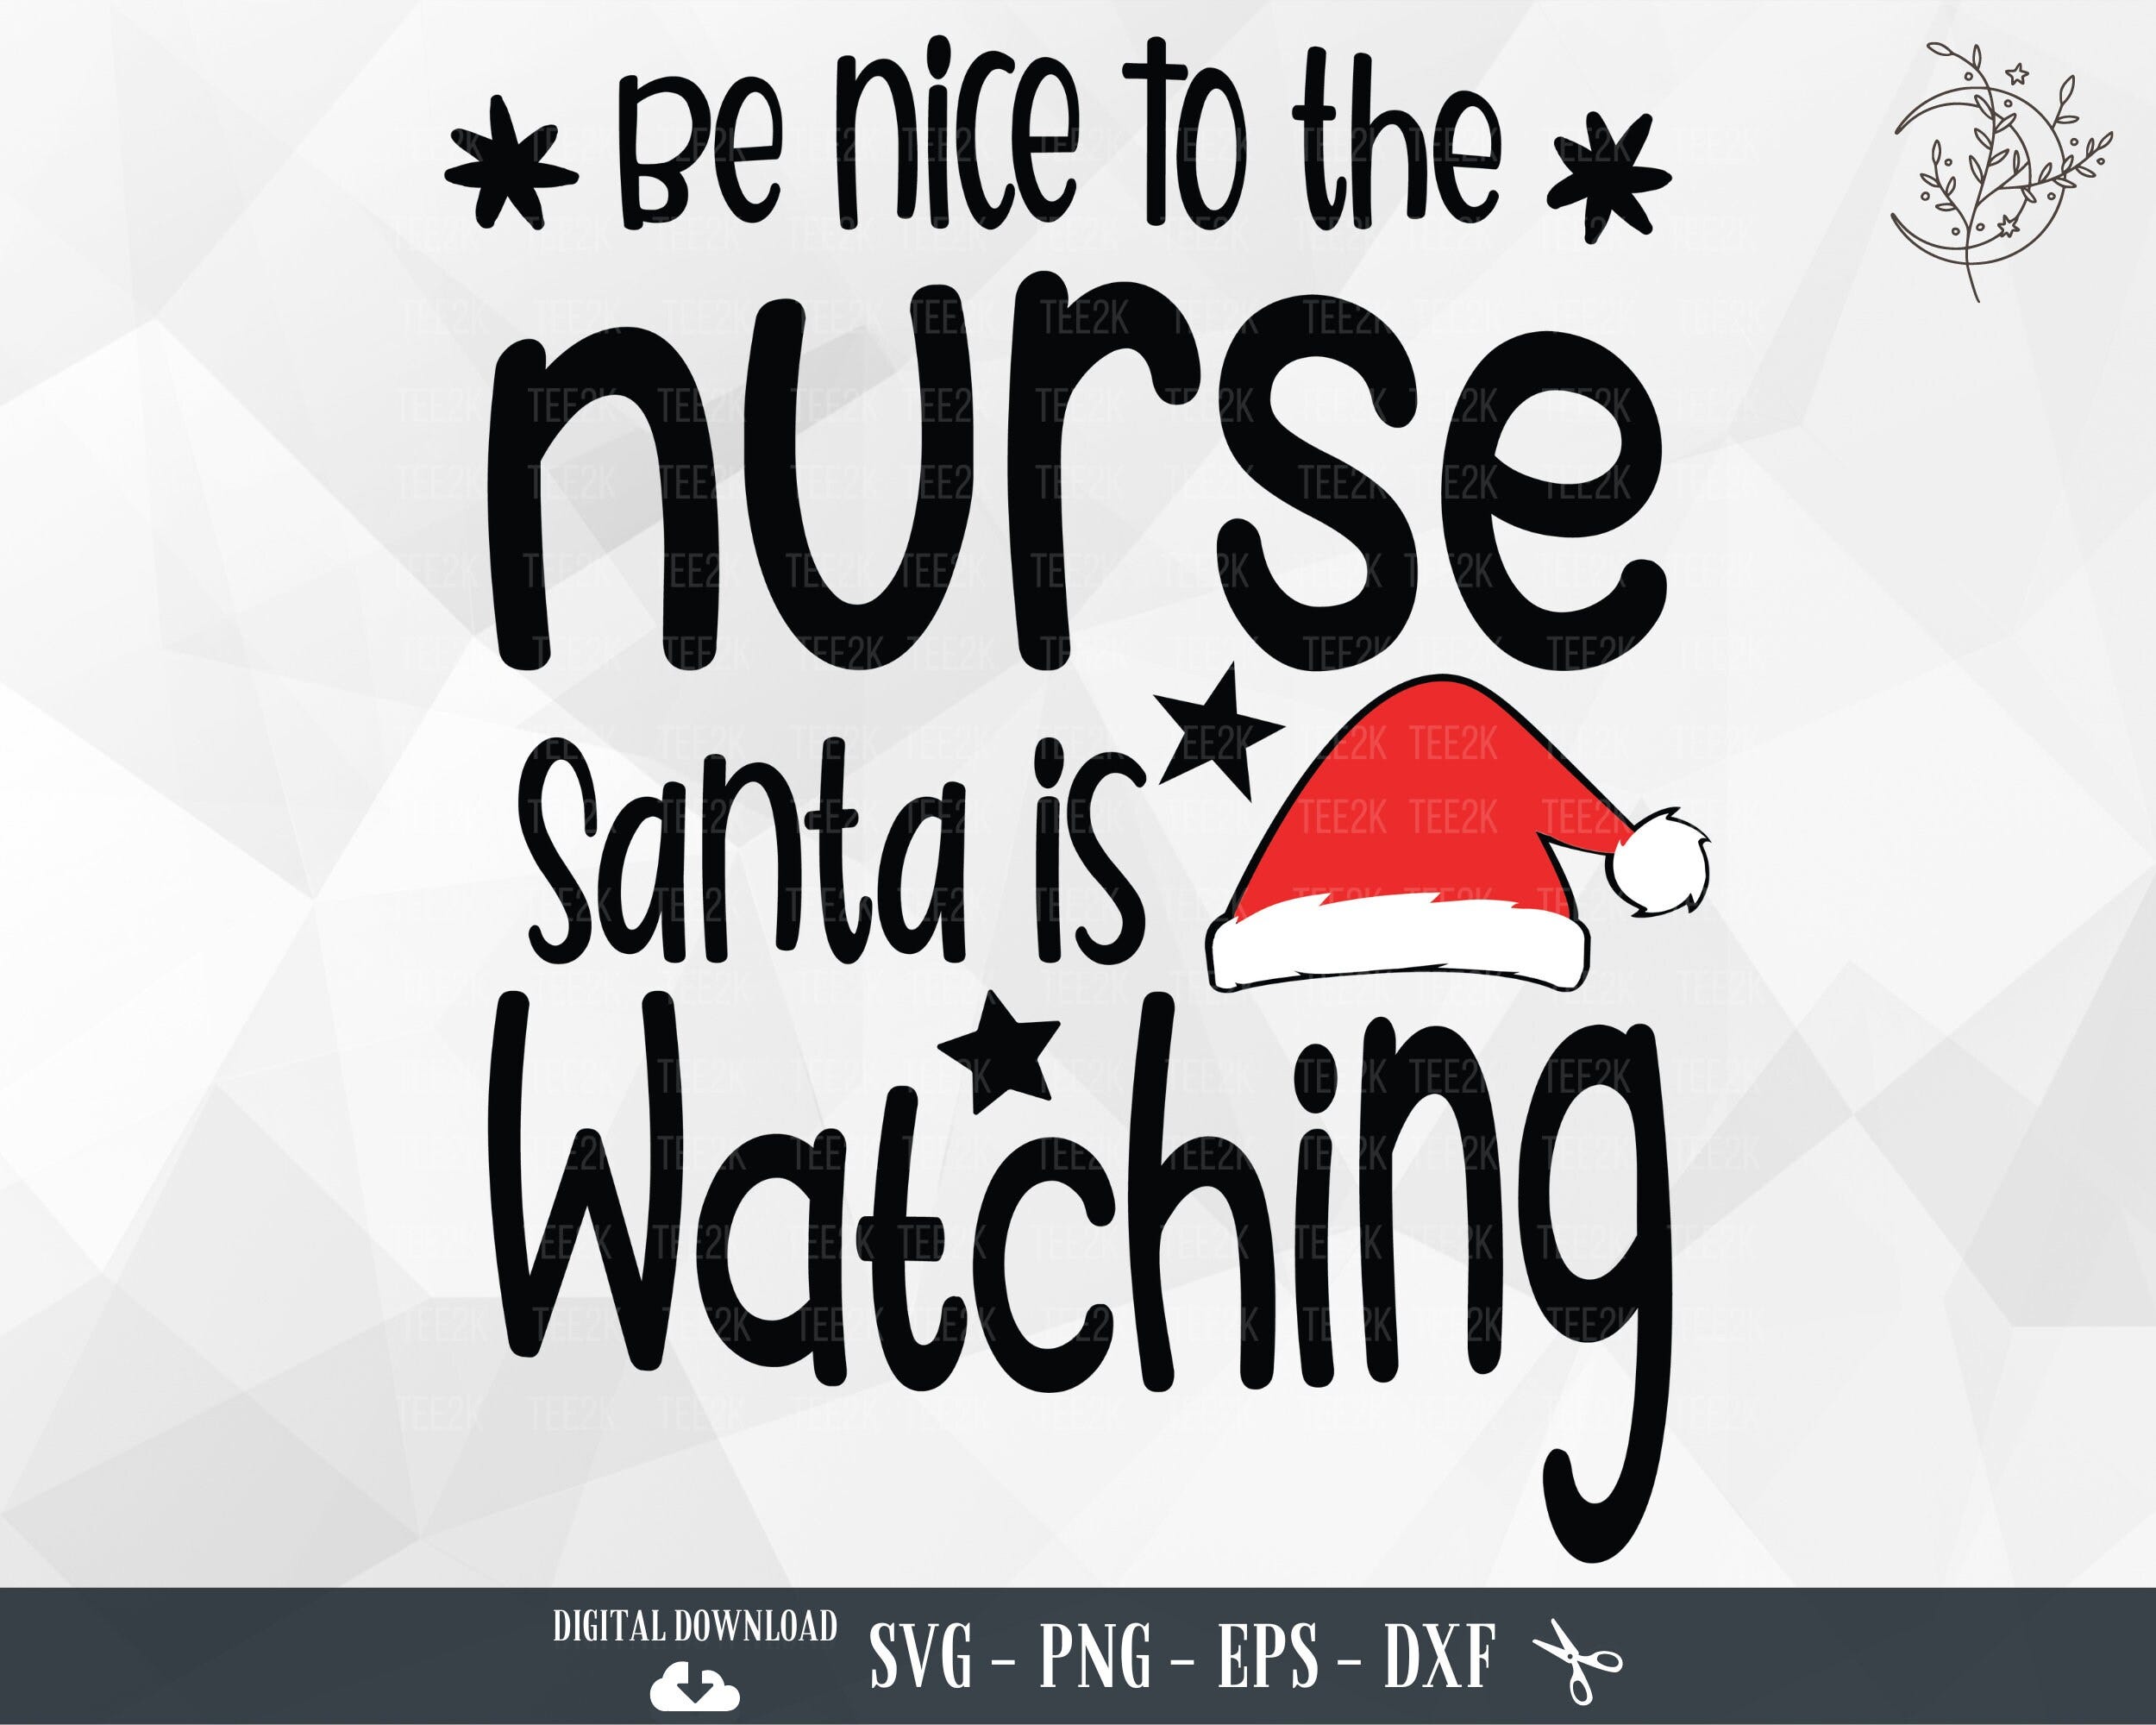 Nurse Christmas SVG, Be Nice to the Nurse Santa is Watching, Nurse life, Christmas Sayings, Humor, Files for Cricut, PNG, Digital Download